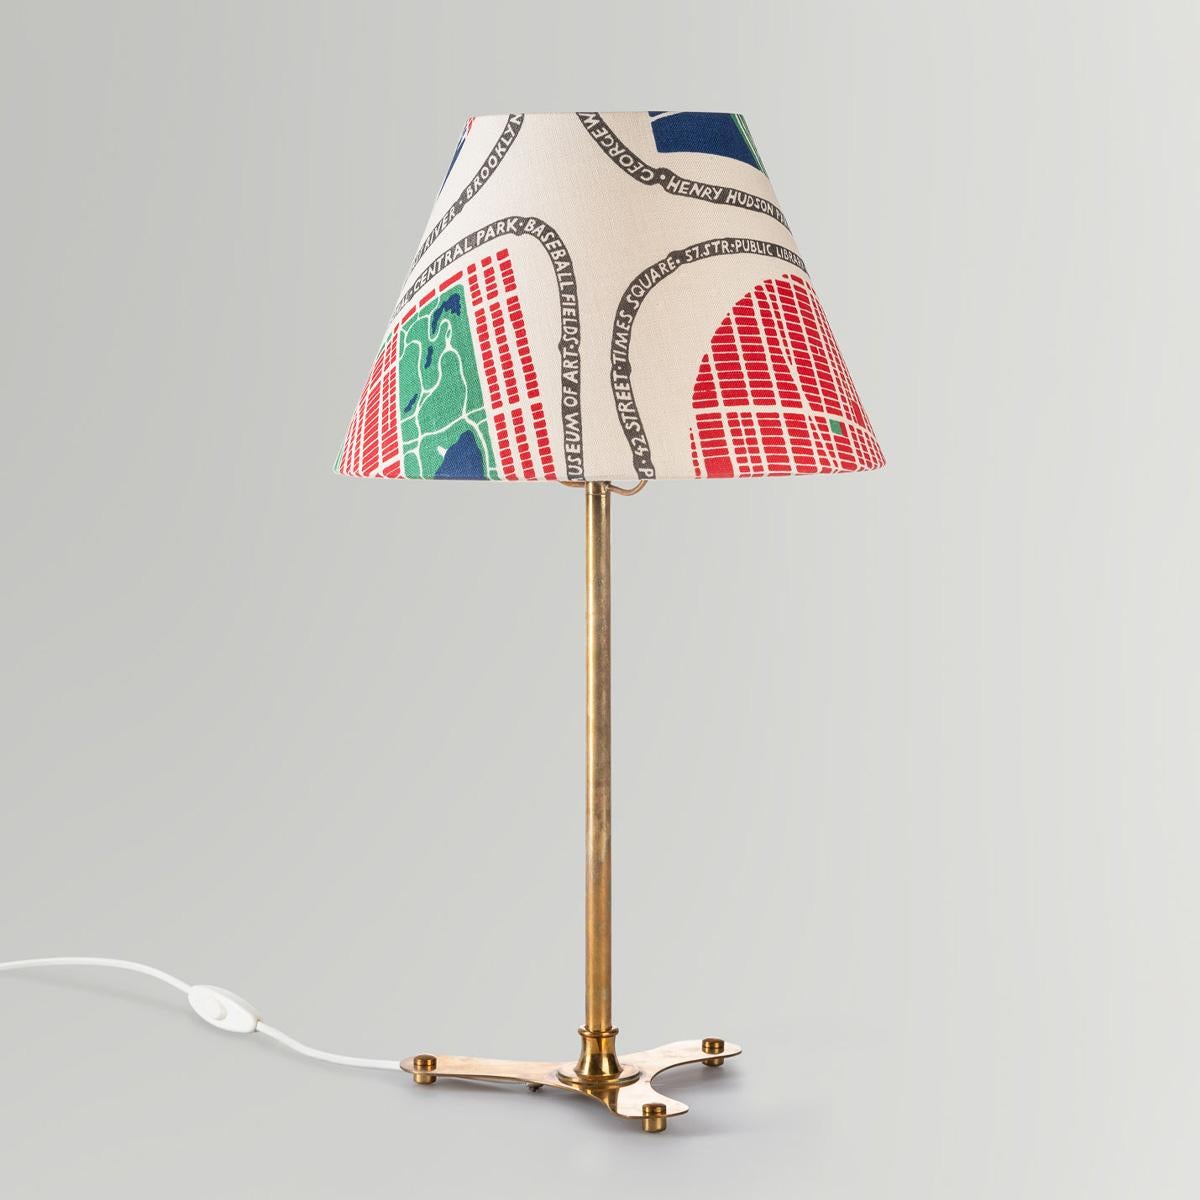 Brass table lamp, model 2467, designed by Josef Frank for Svenskt Tenn in Sweden, 1950s.

This elegant and rare Swedish table lamp was designed in the 1950s by renowned Austrian-born architect and designer Josef Frank for Svenskt Tenn. The lamp